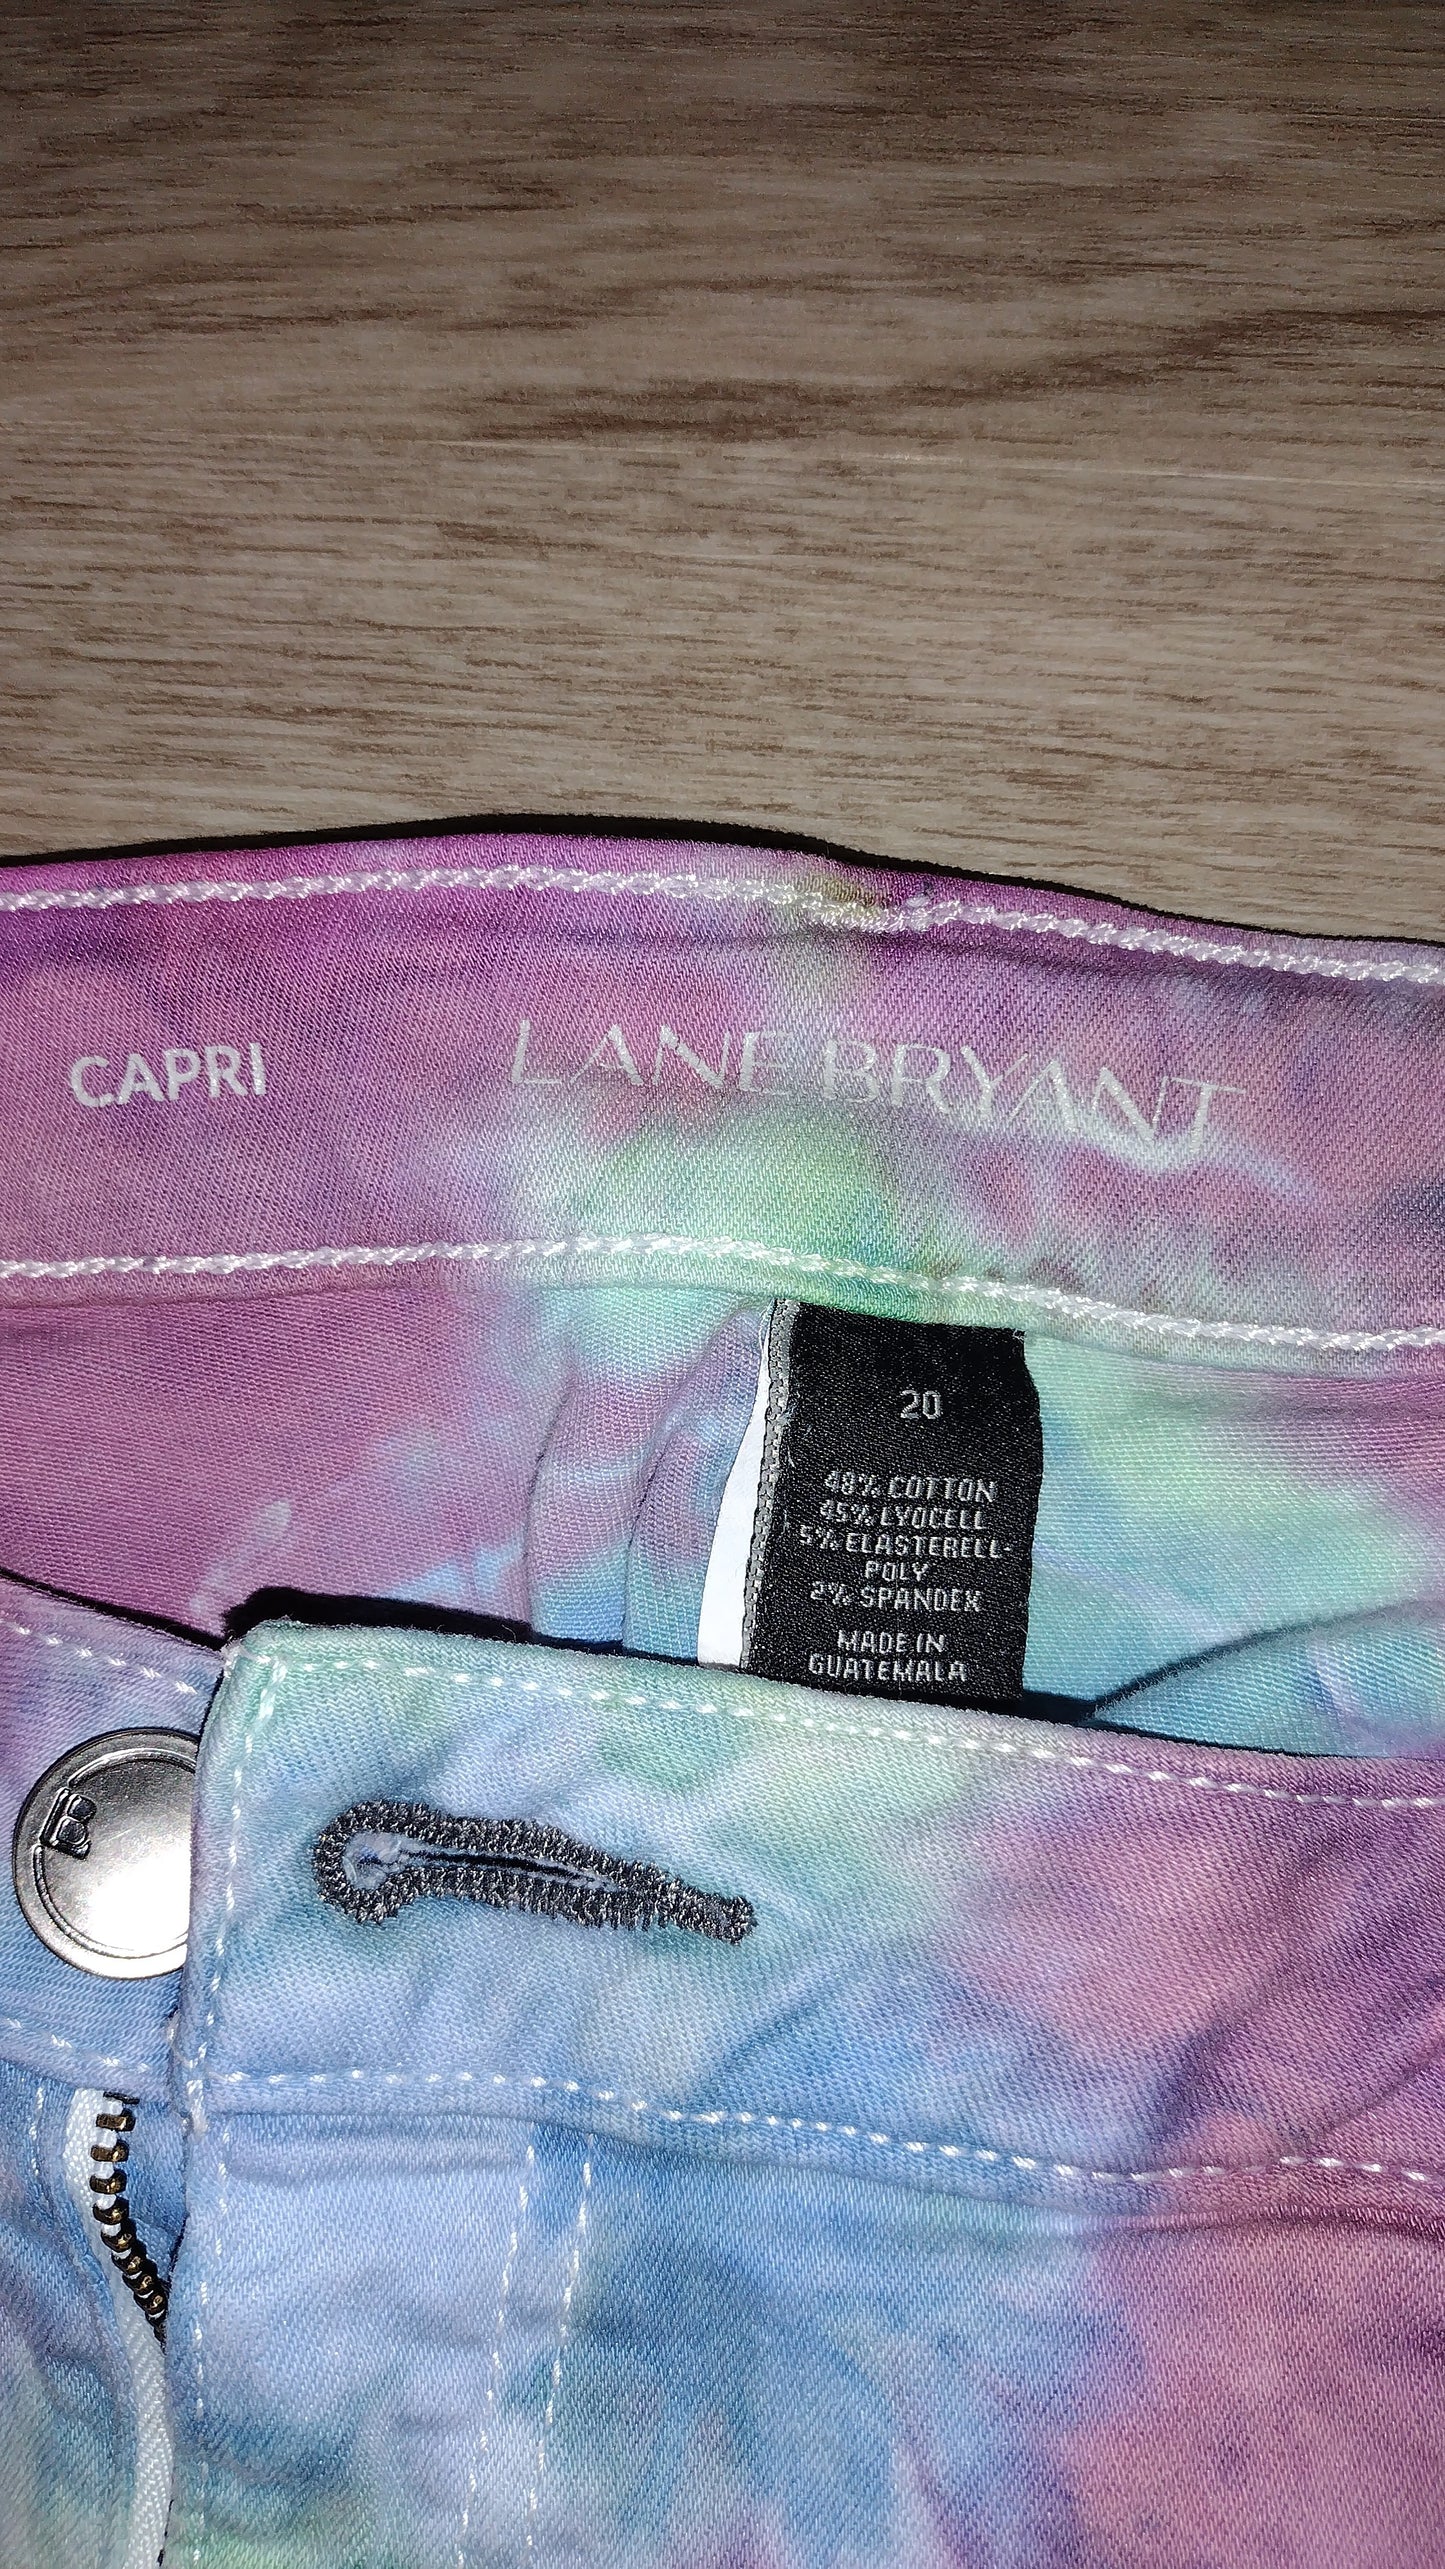 Lane Bryant Capri Size 20 Jeans